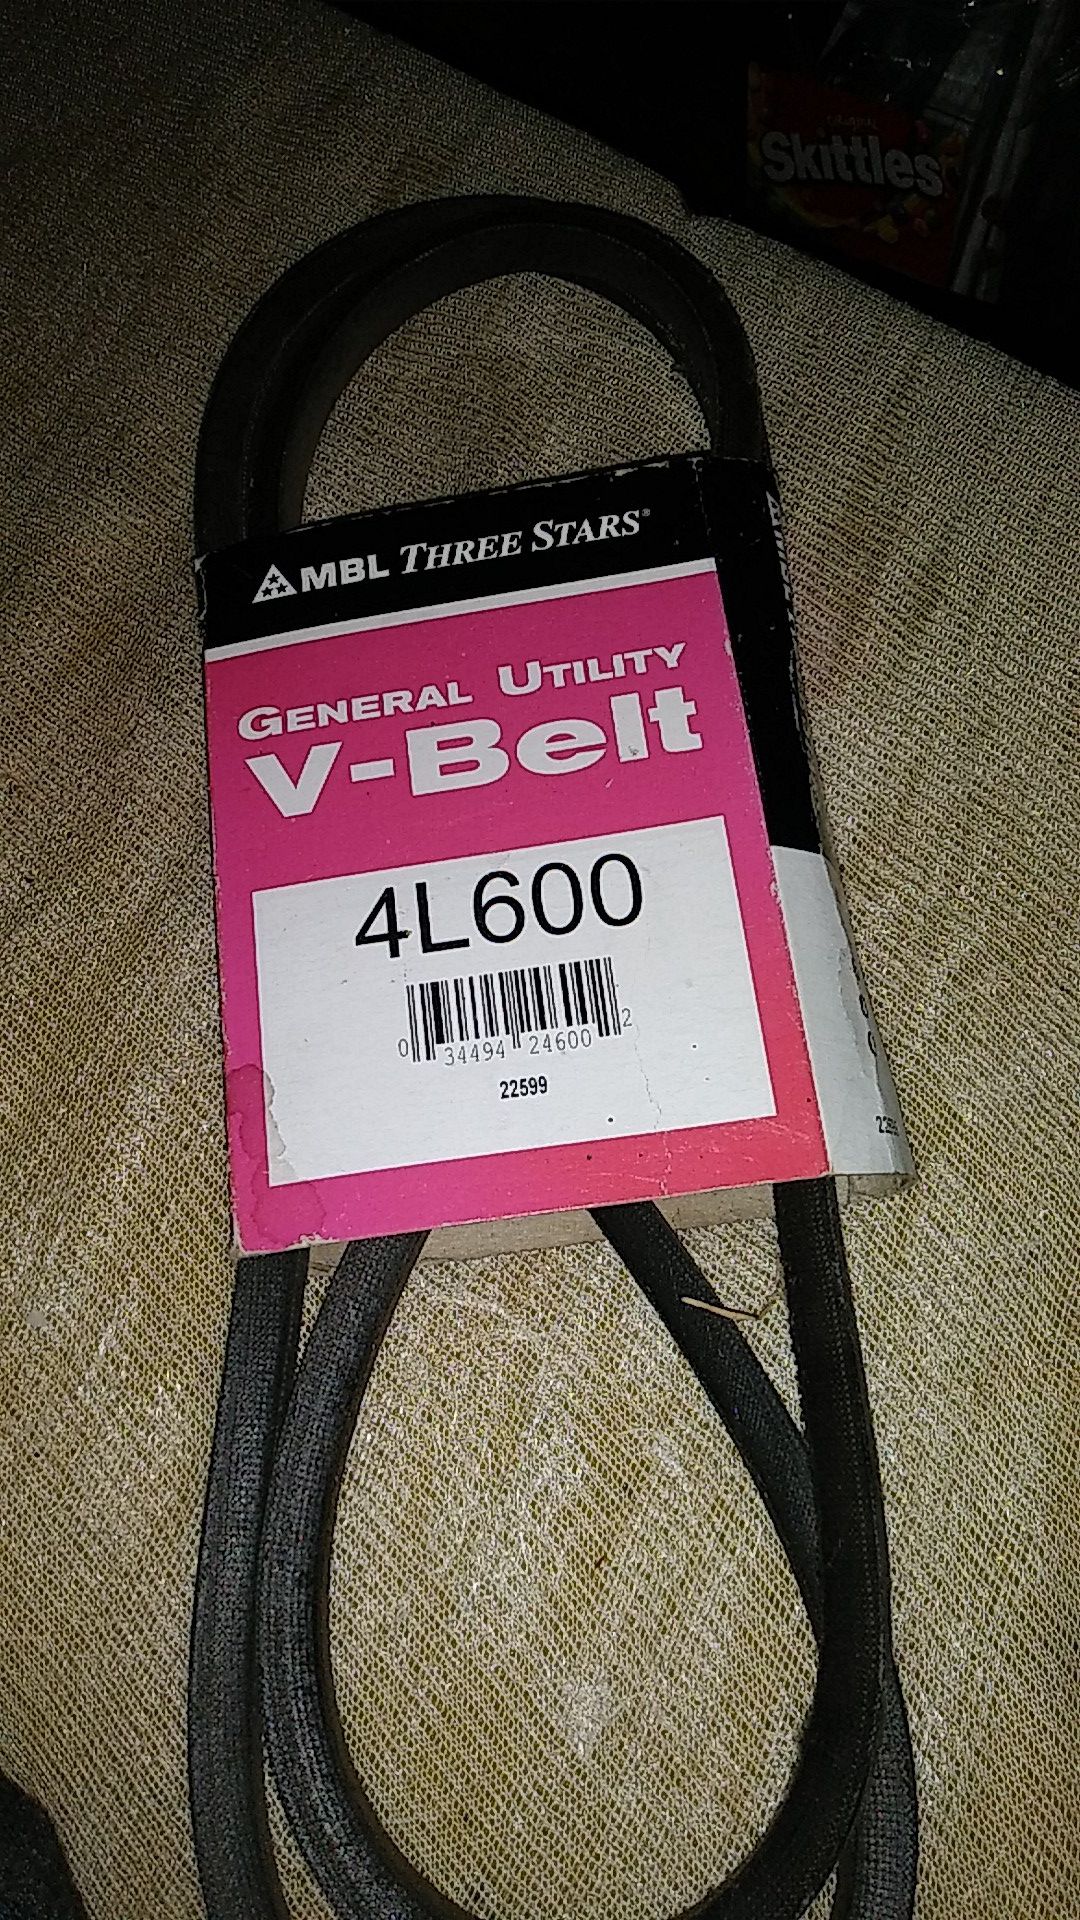 MBL 4L600A General Utility V-Belt 0.5 x 60 in